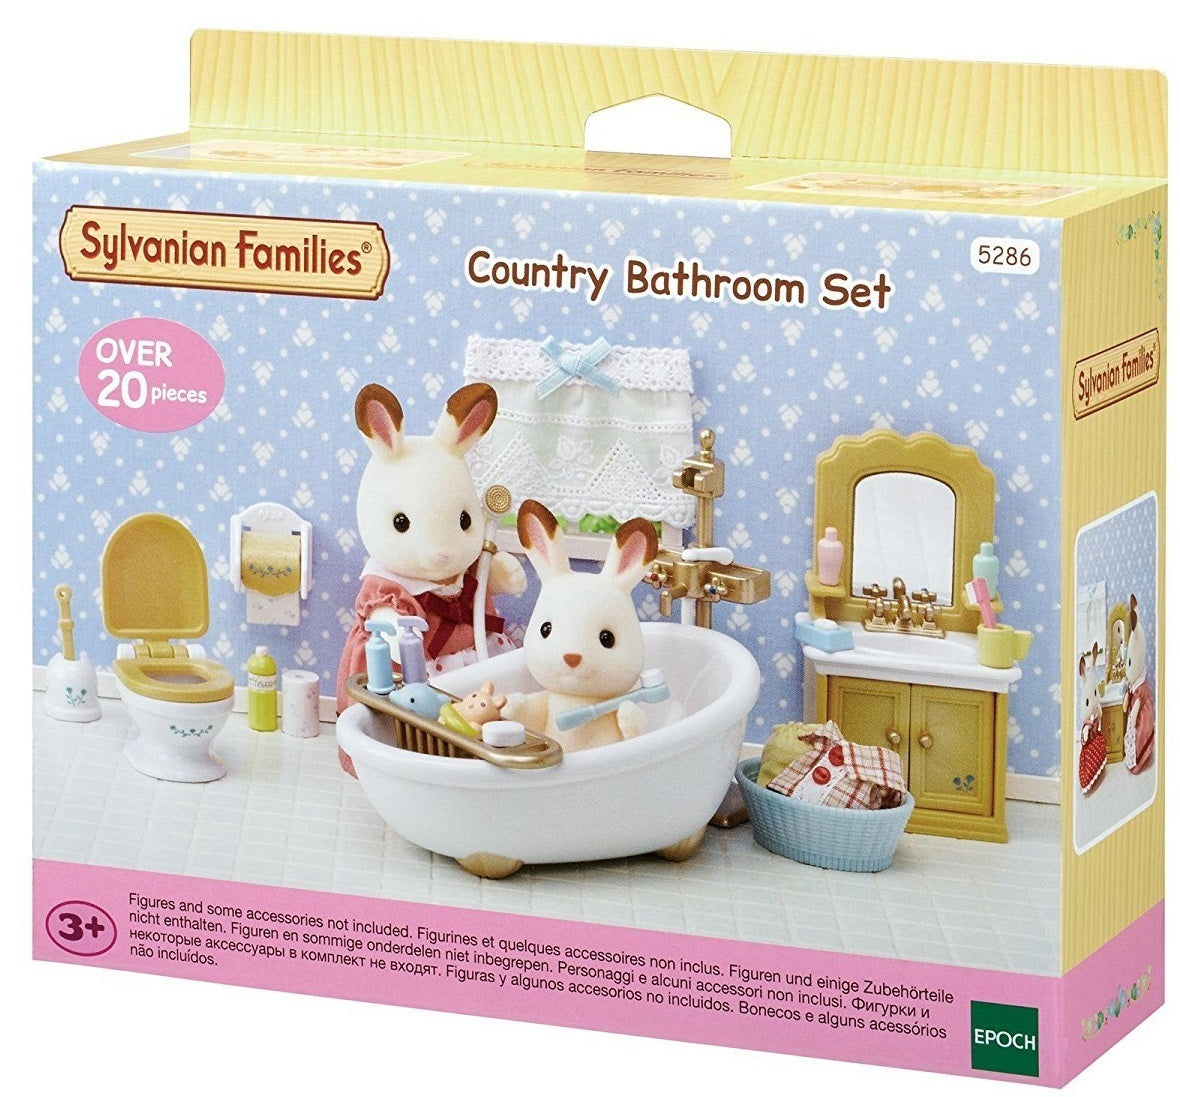 Sylvanian Families 5286 Country Bathroom Set box